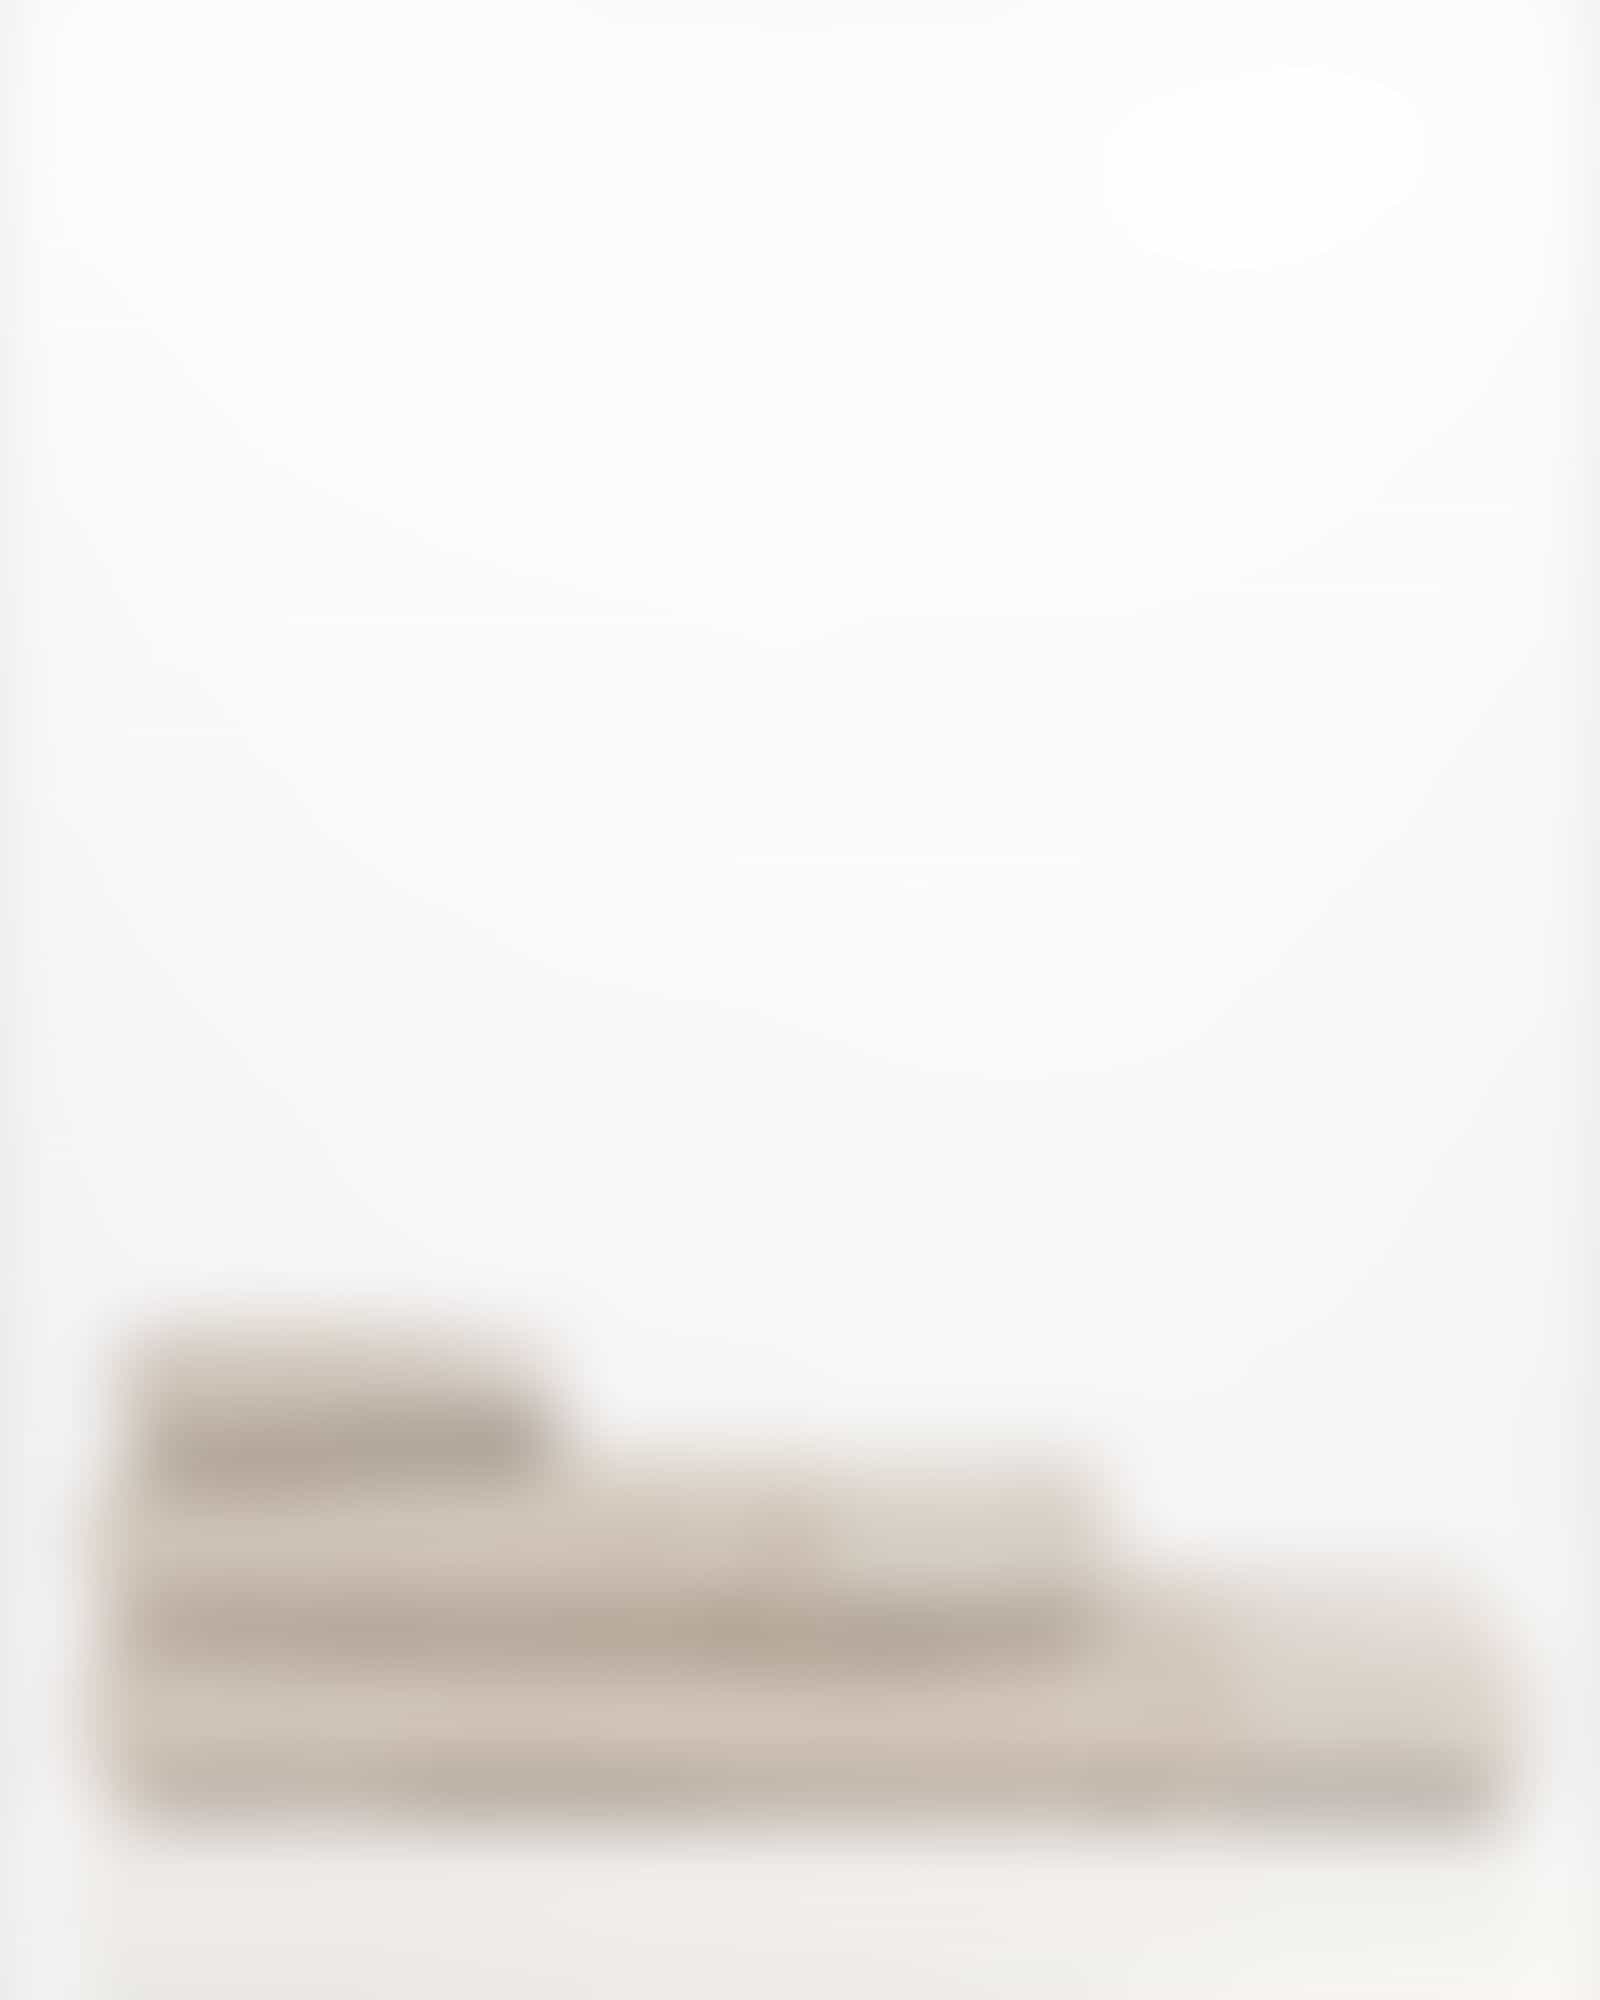 Möve Handtücher Wellbeing Perlstruktur - Farbe: cashmere - 713 - Duschtuch 67x140 cm Detailbild 3